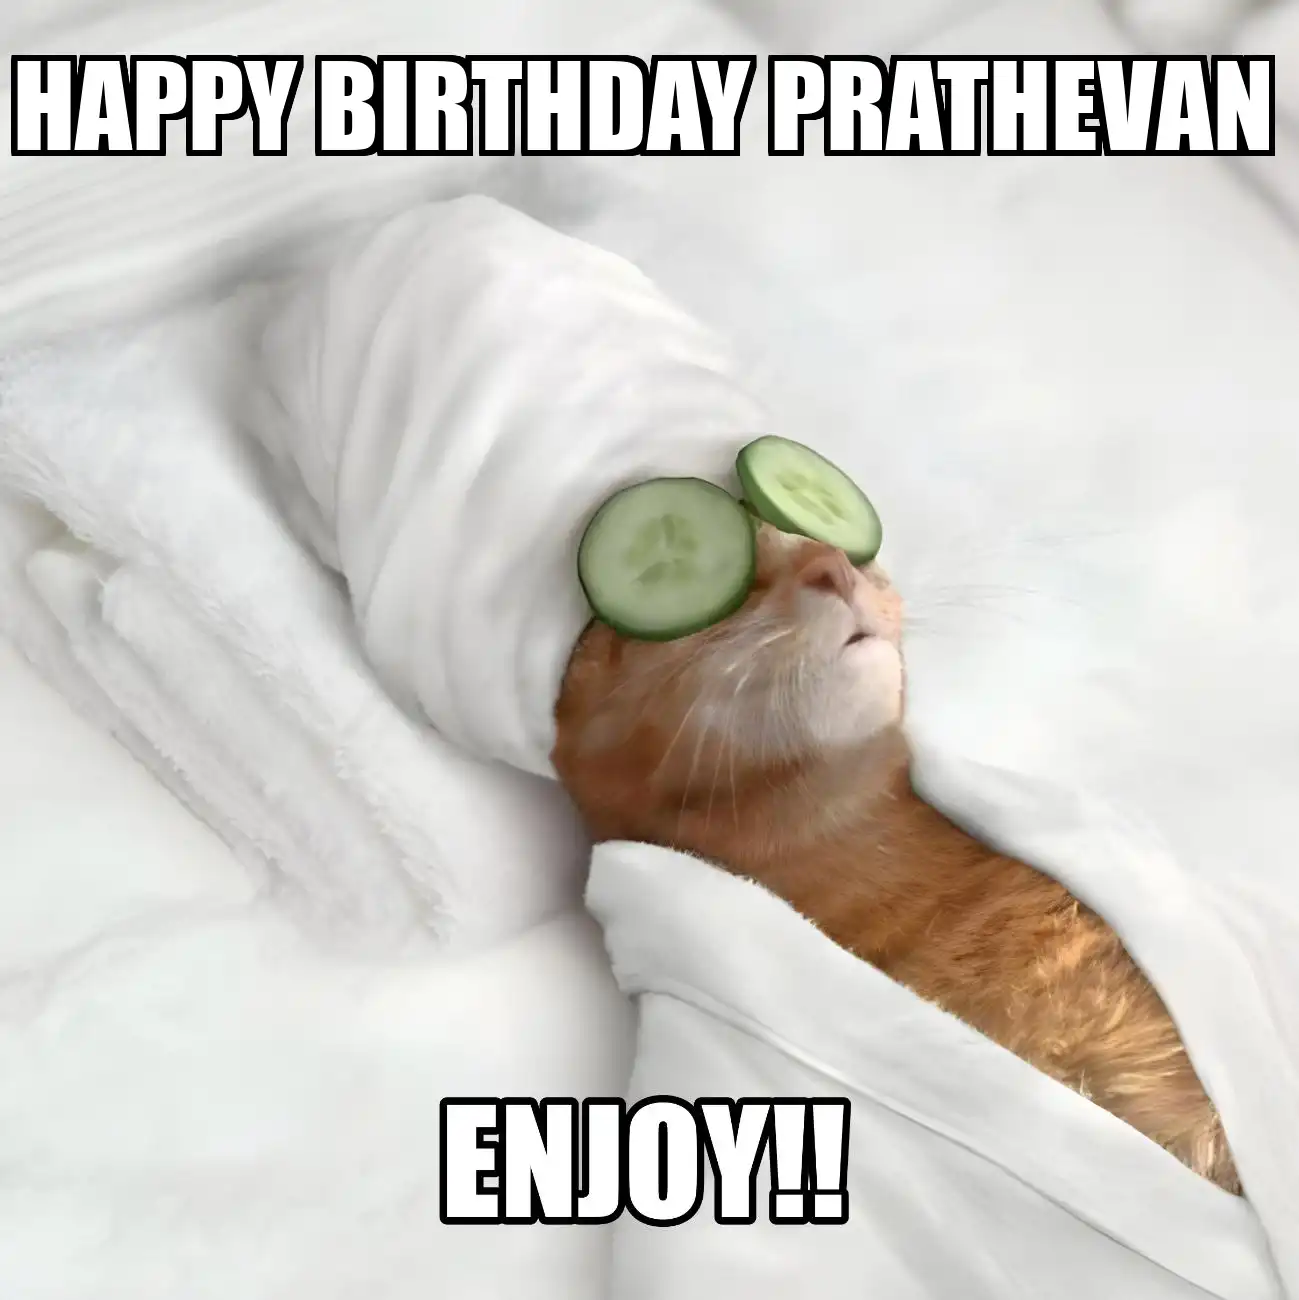 Happy Birthday Prathevan Enjoy Cat Meme